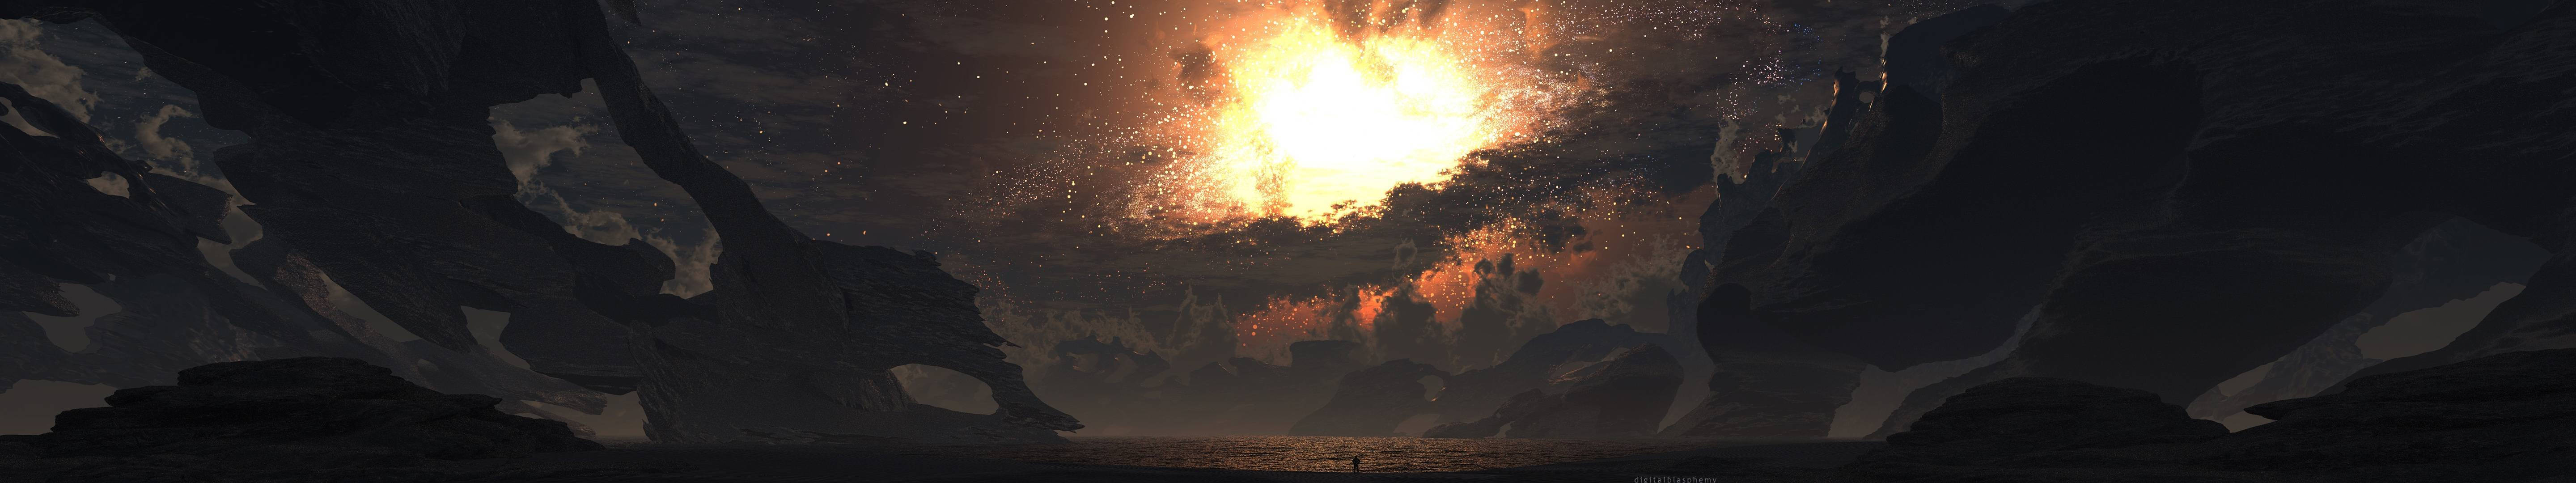 Dark Sky Explosion Background